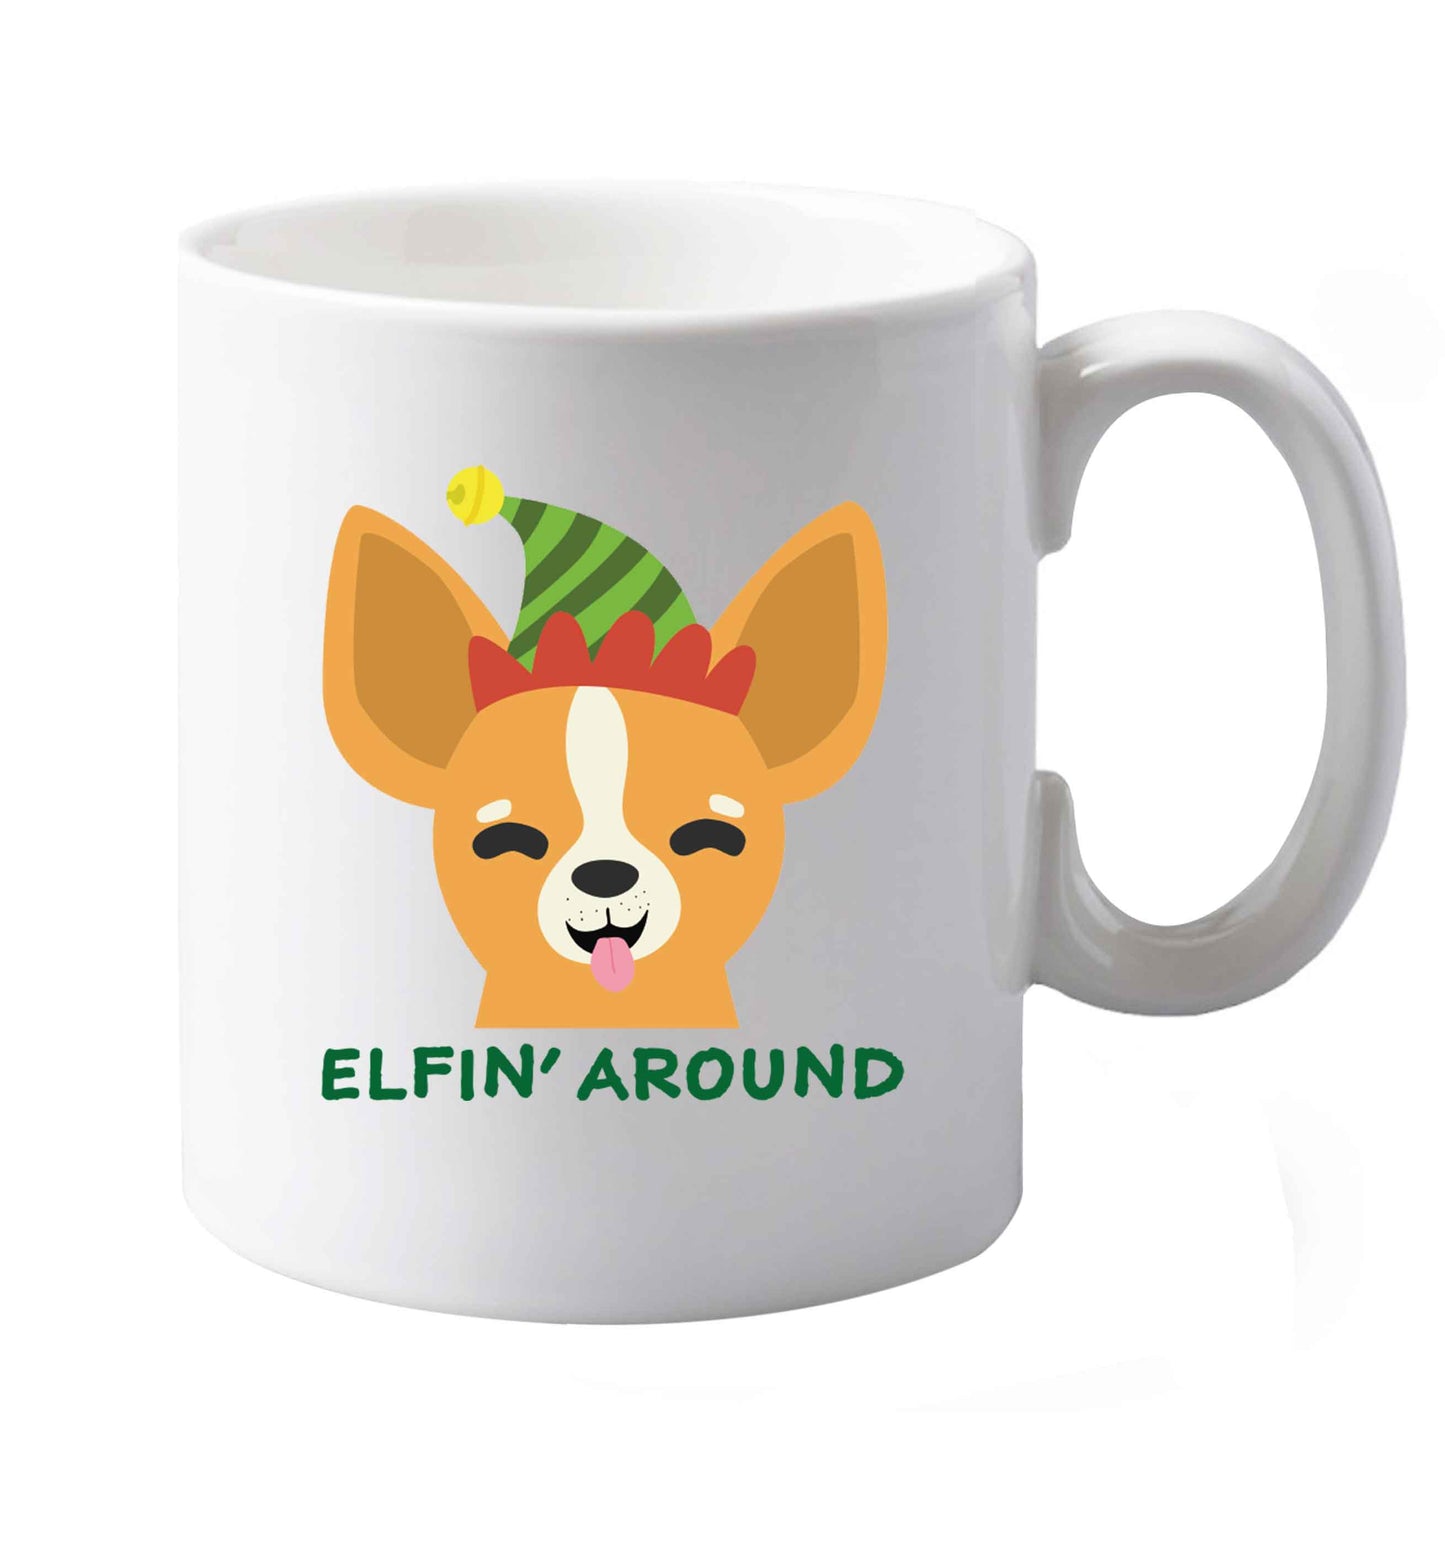 10 oz Elfin' around ceramic mug both sides